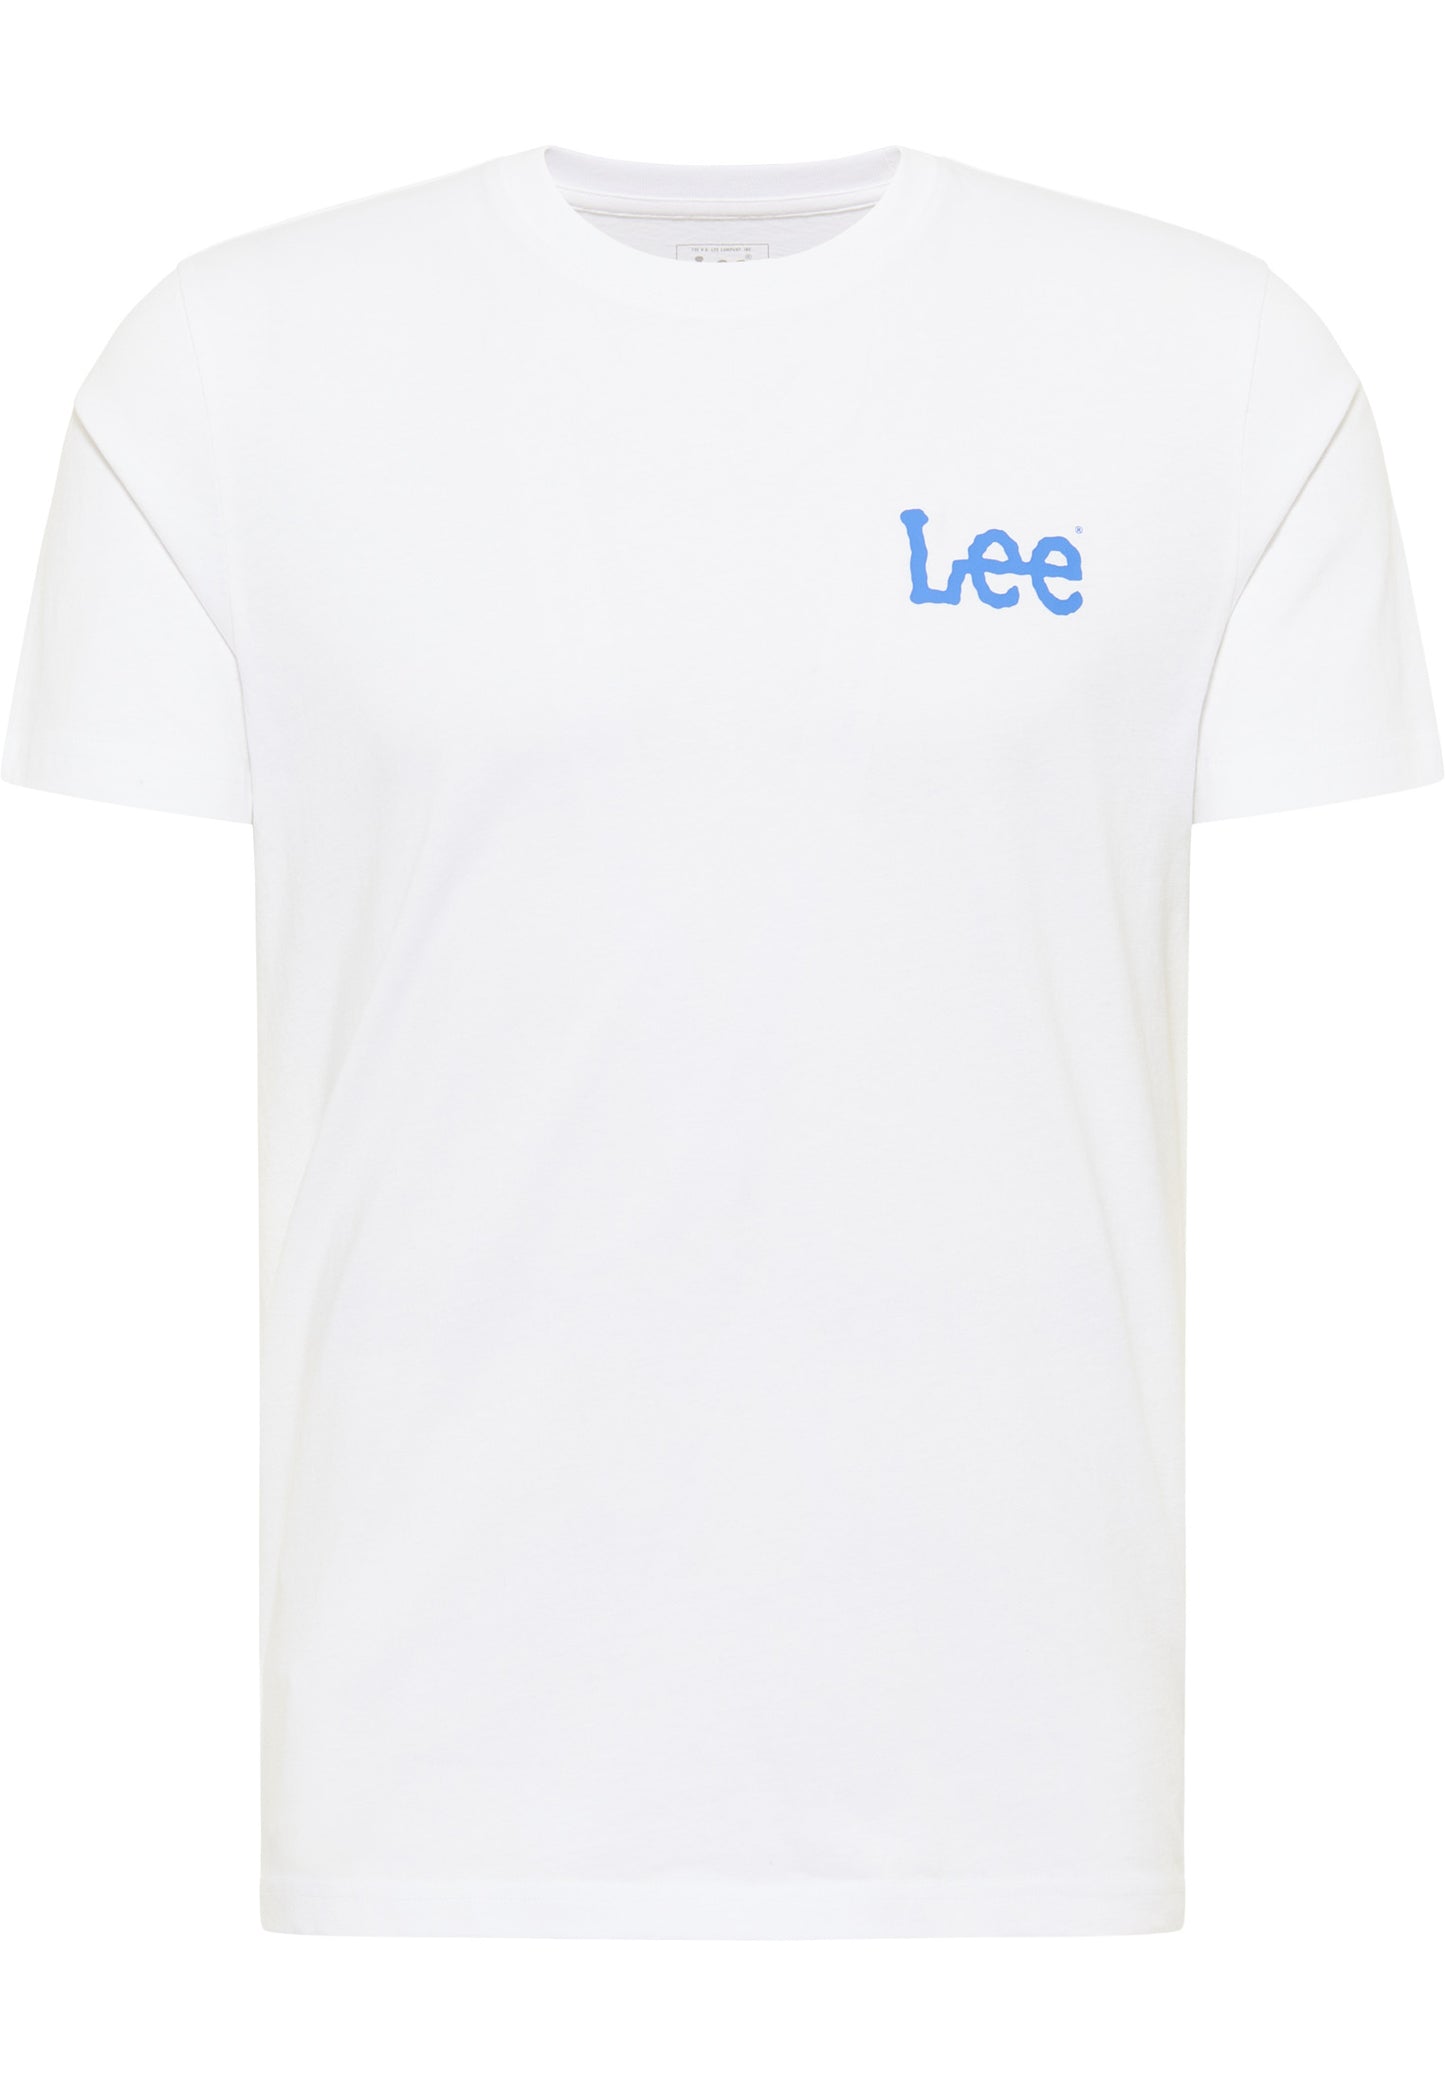 Lee Medium Wobbly Tee Bright White Shirt